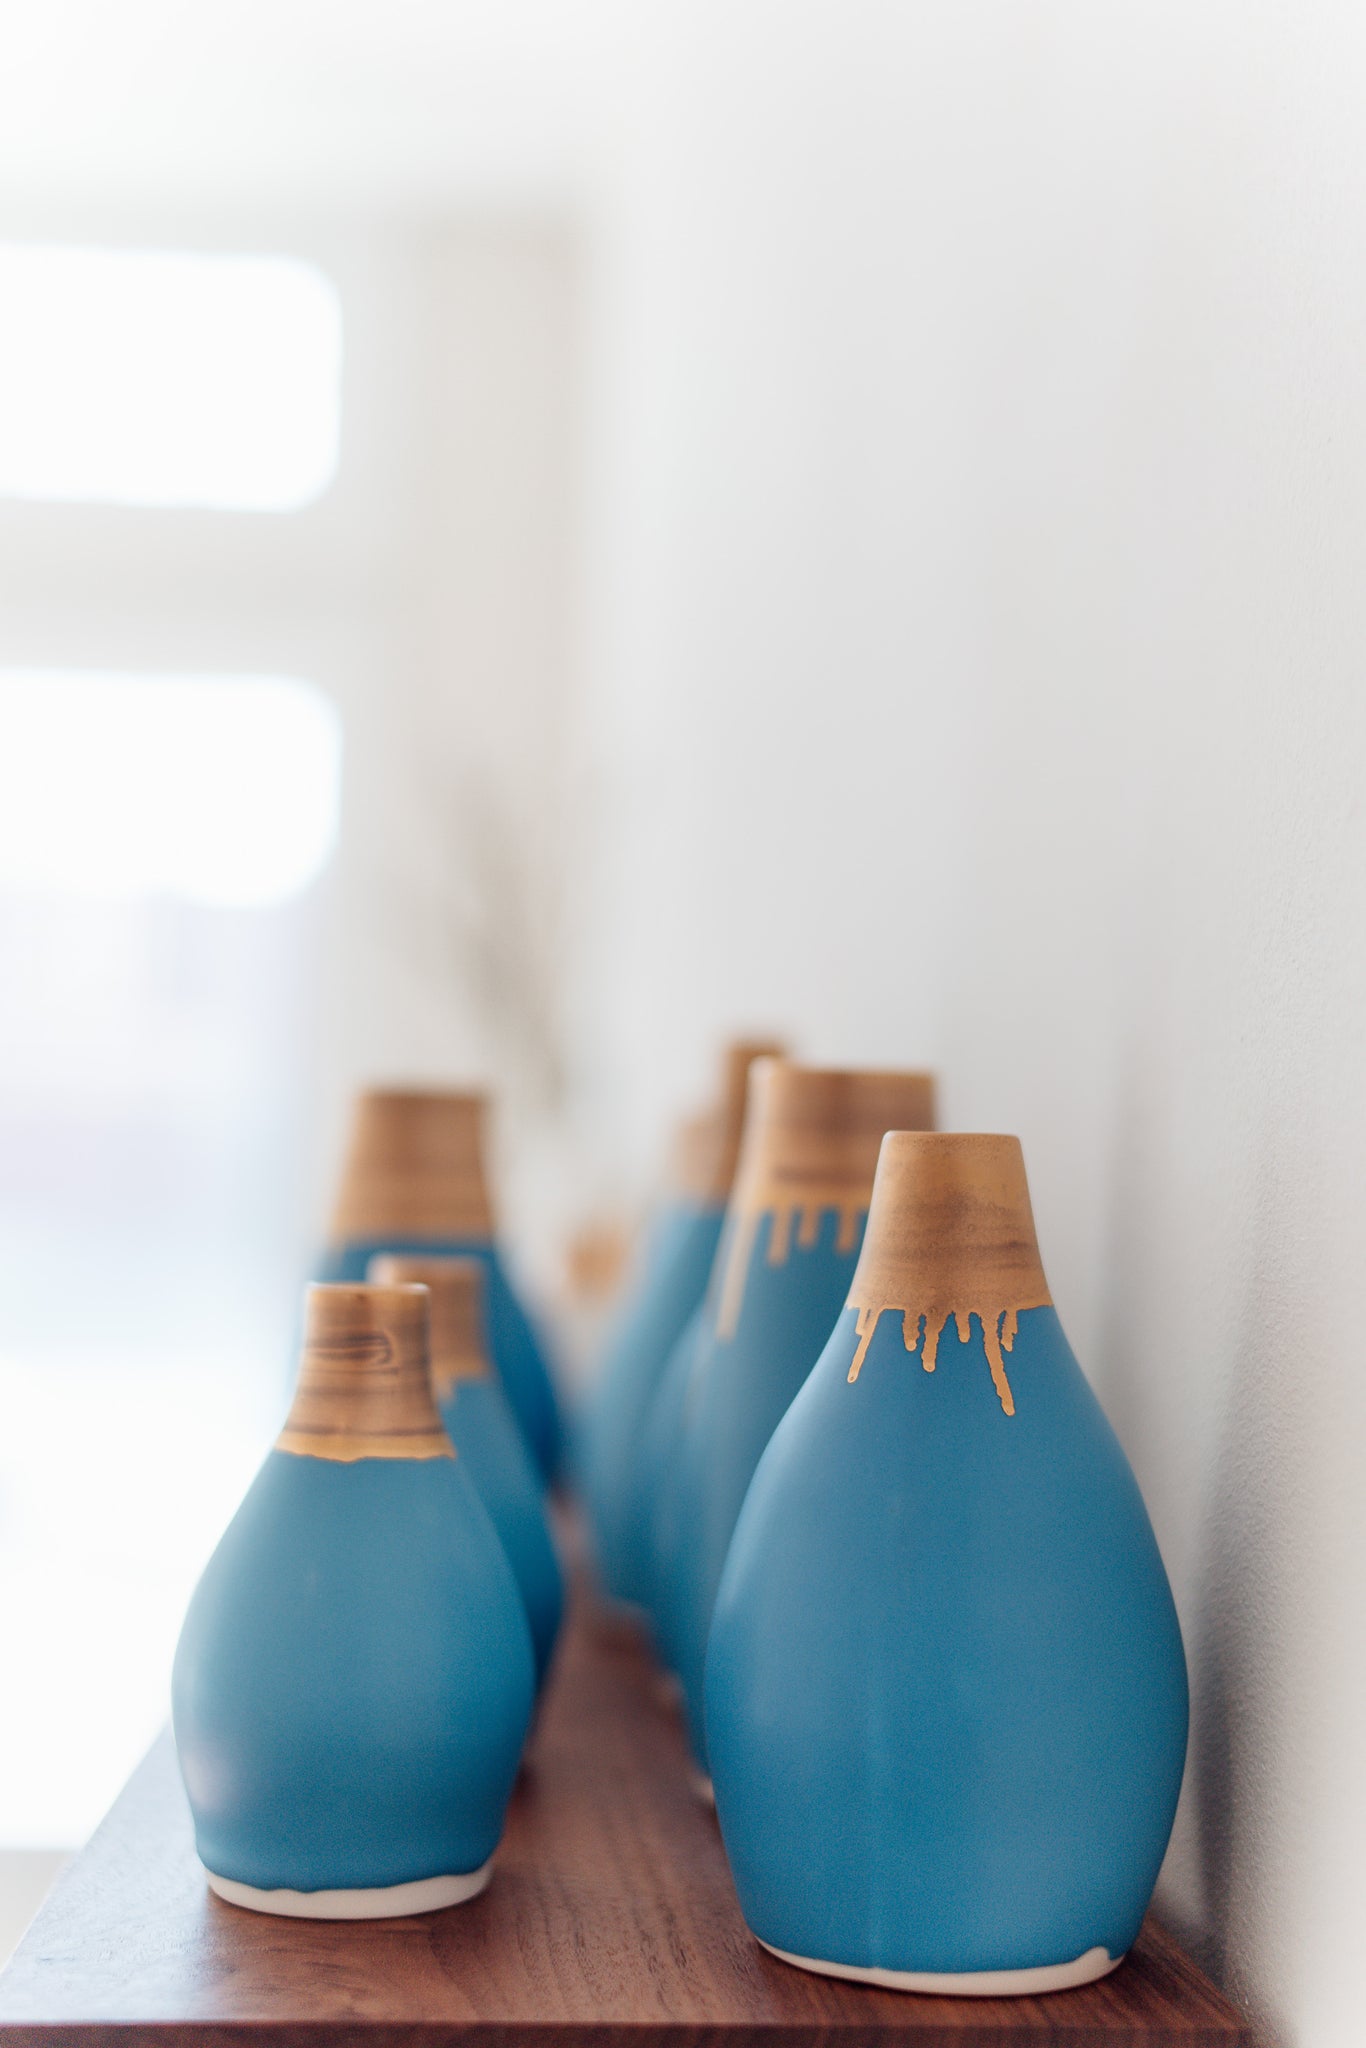 Gramercy Bottle Vase - Turquoise and Gold